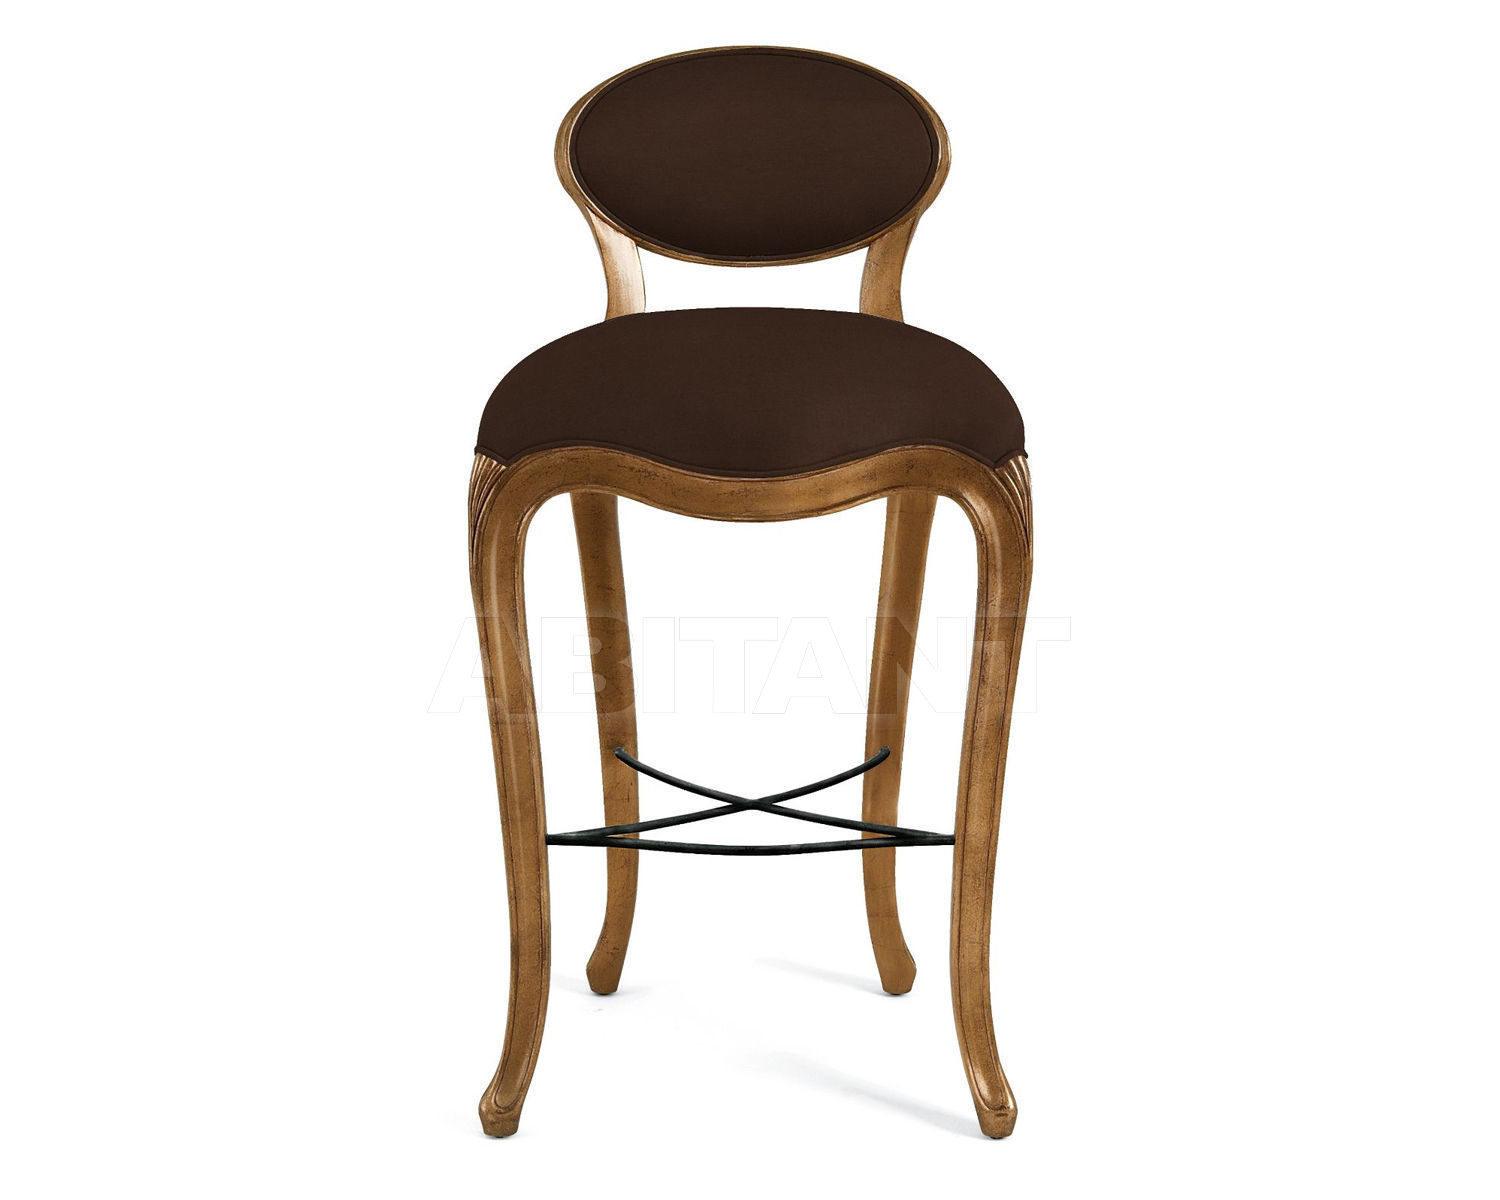 Buy Bar stool Cafe de Paris Christopher Guy 2014 60-0024-CC Mahogany